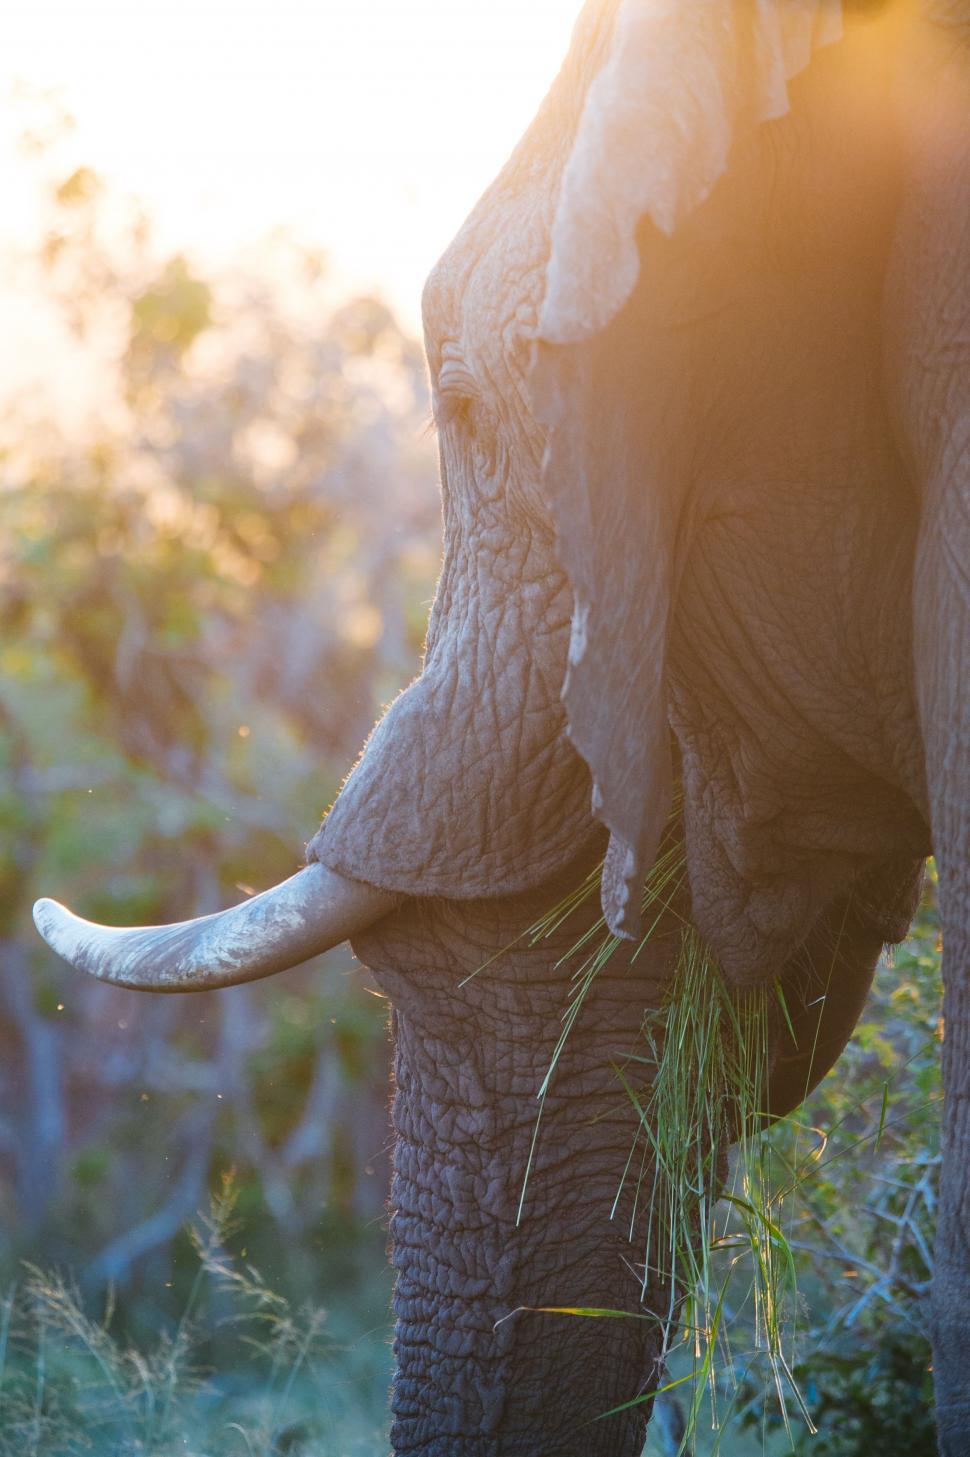 Free Image of Elephant Eating Grass Up Close 